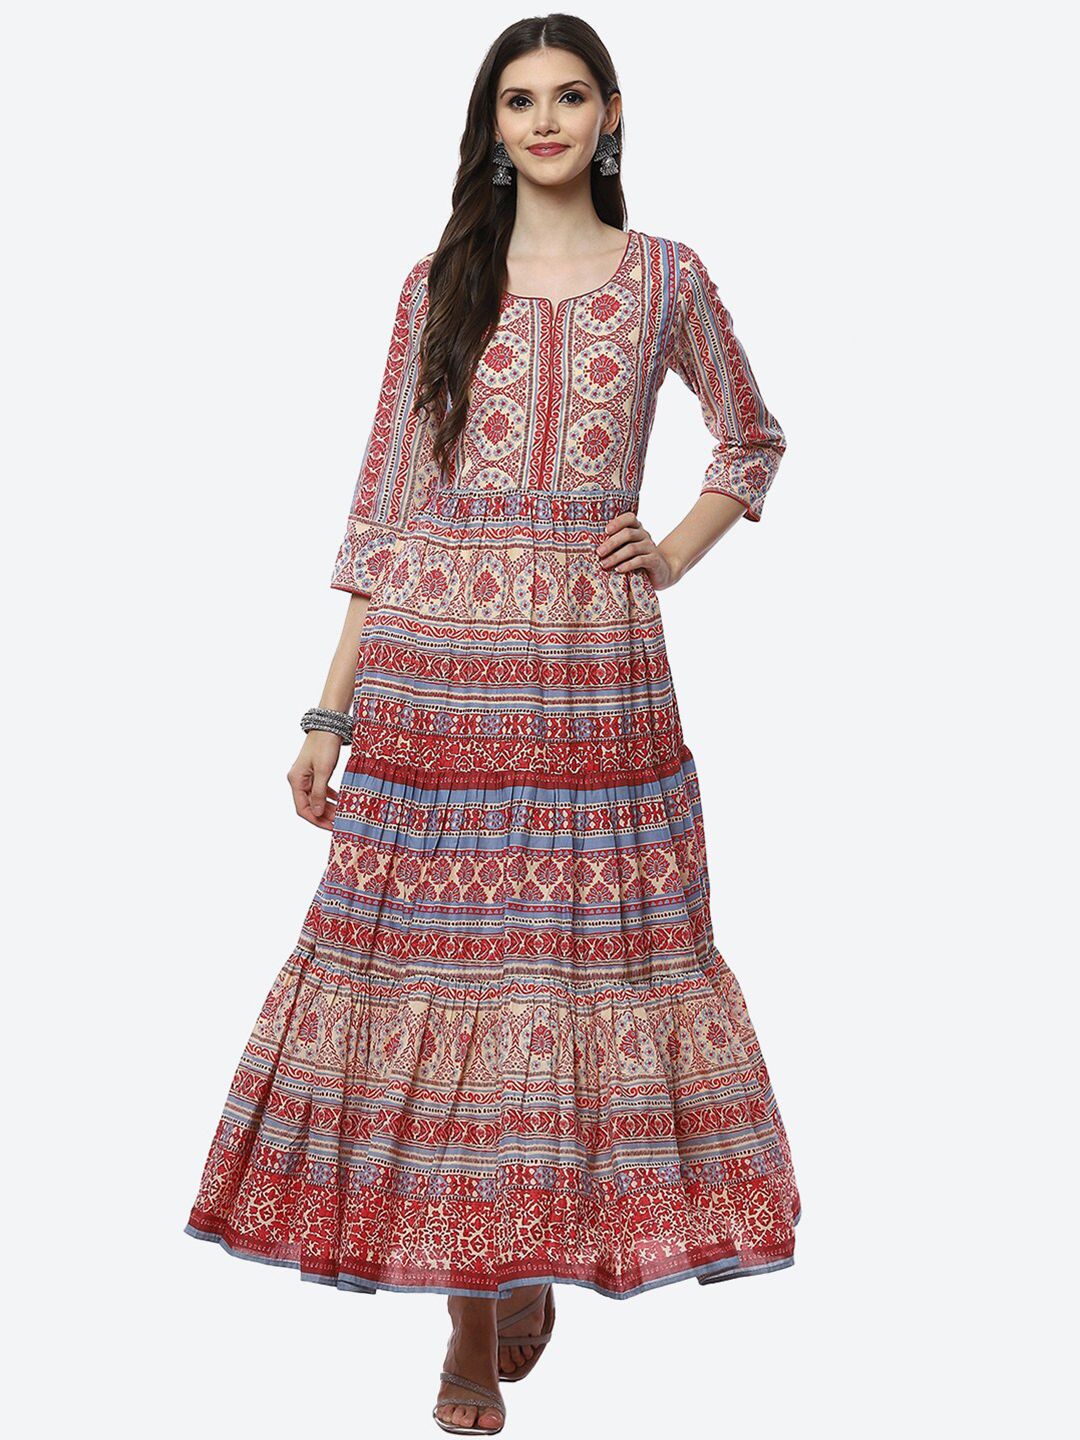 Biba Cream-Coloured & Red Ethnic Motifs Ethnic Maxi Dress Price in India